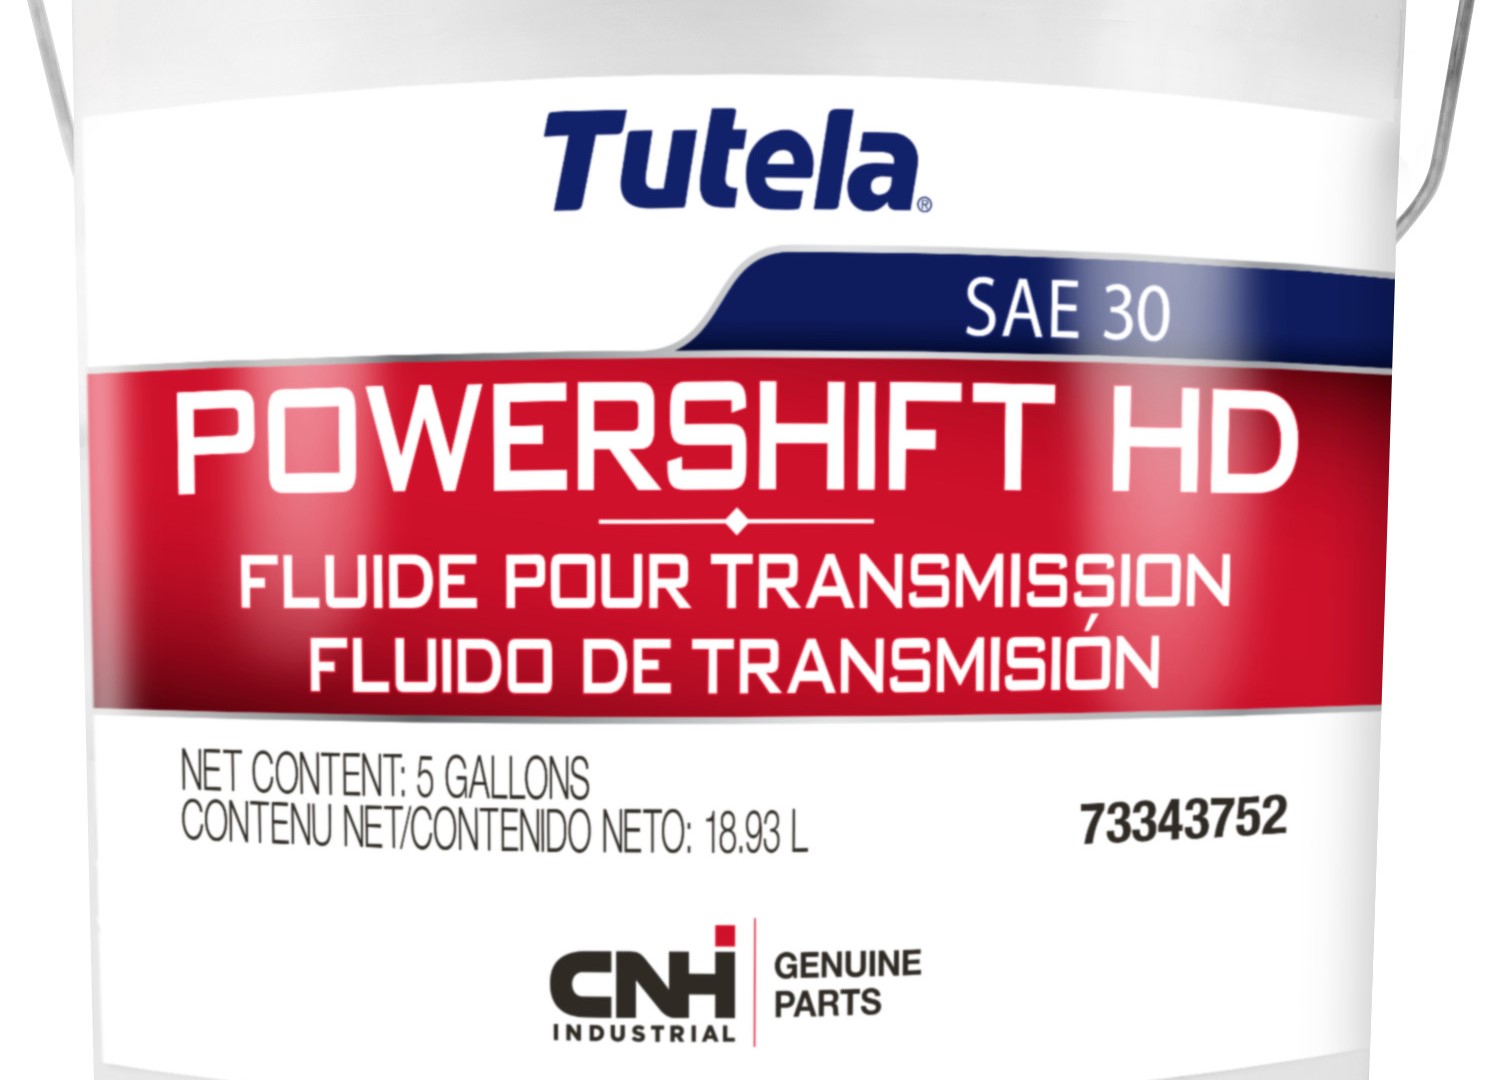 CASE Dealers Offer Tutela Powershift